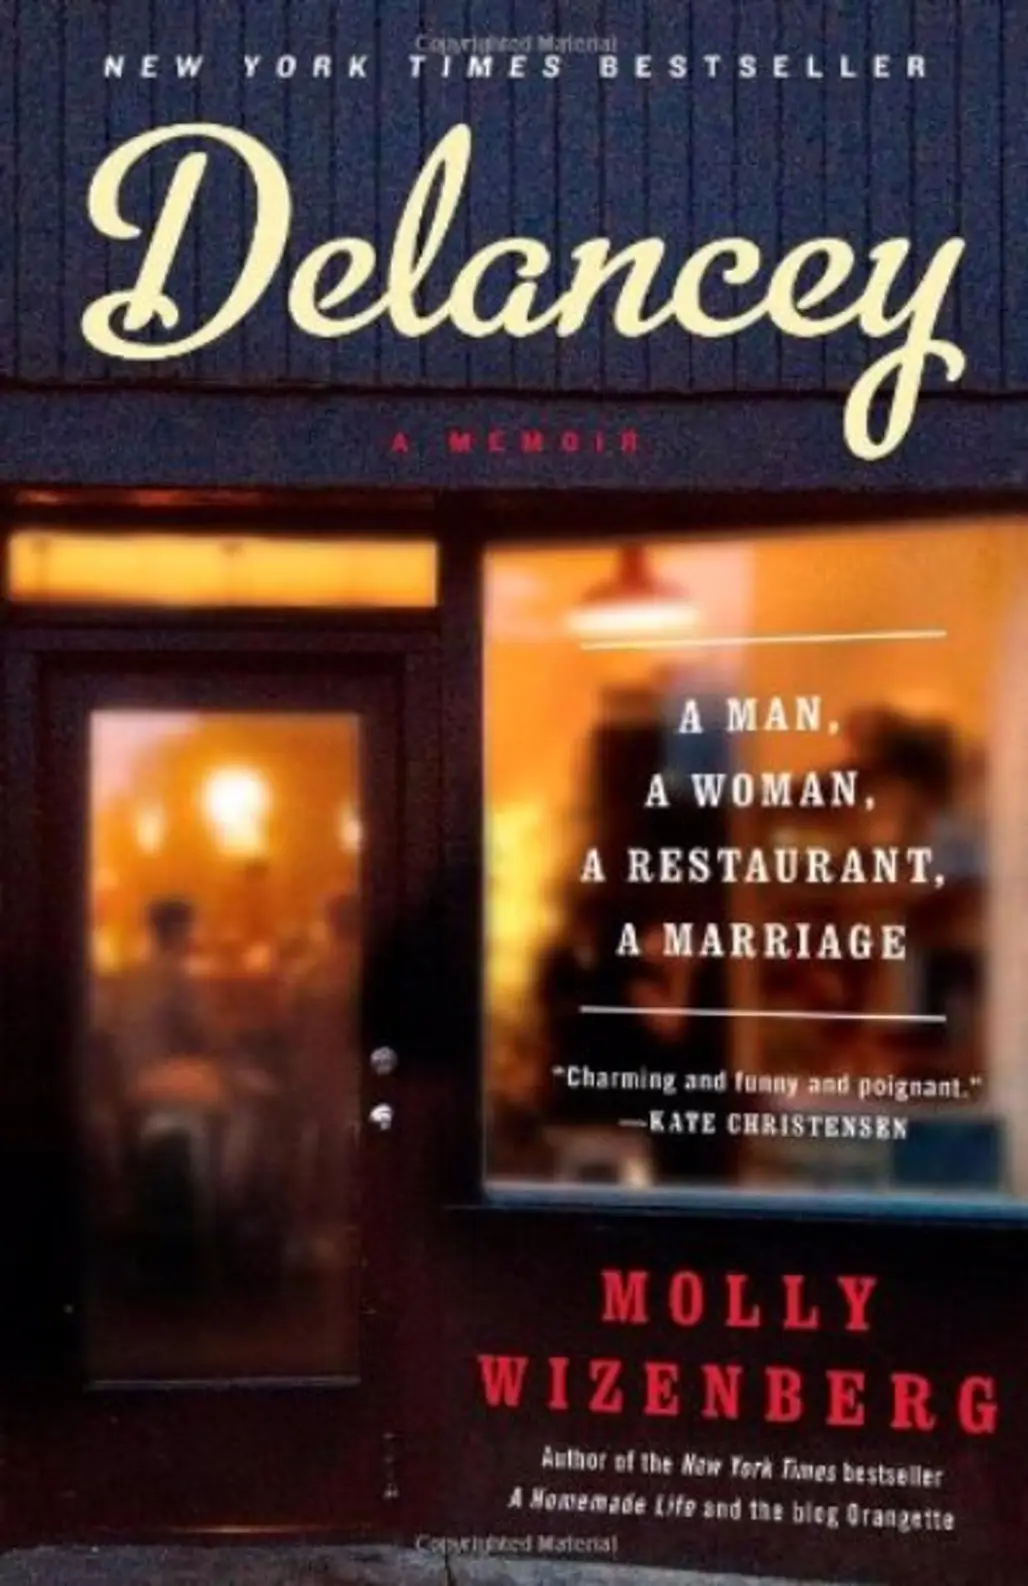 "Delancey" by Molly Wizenberg